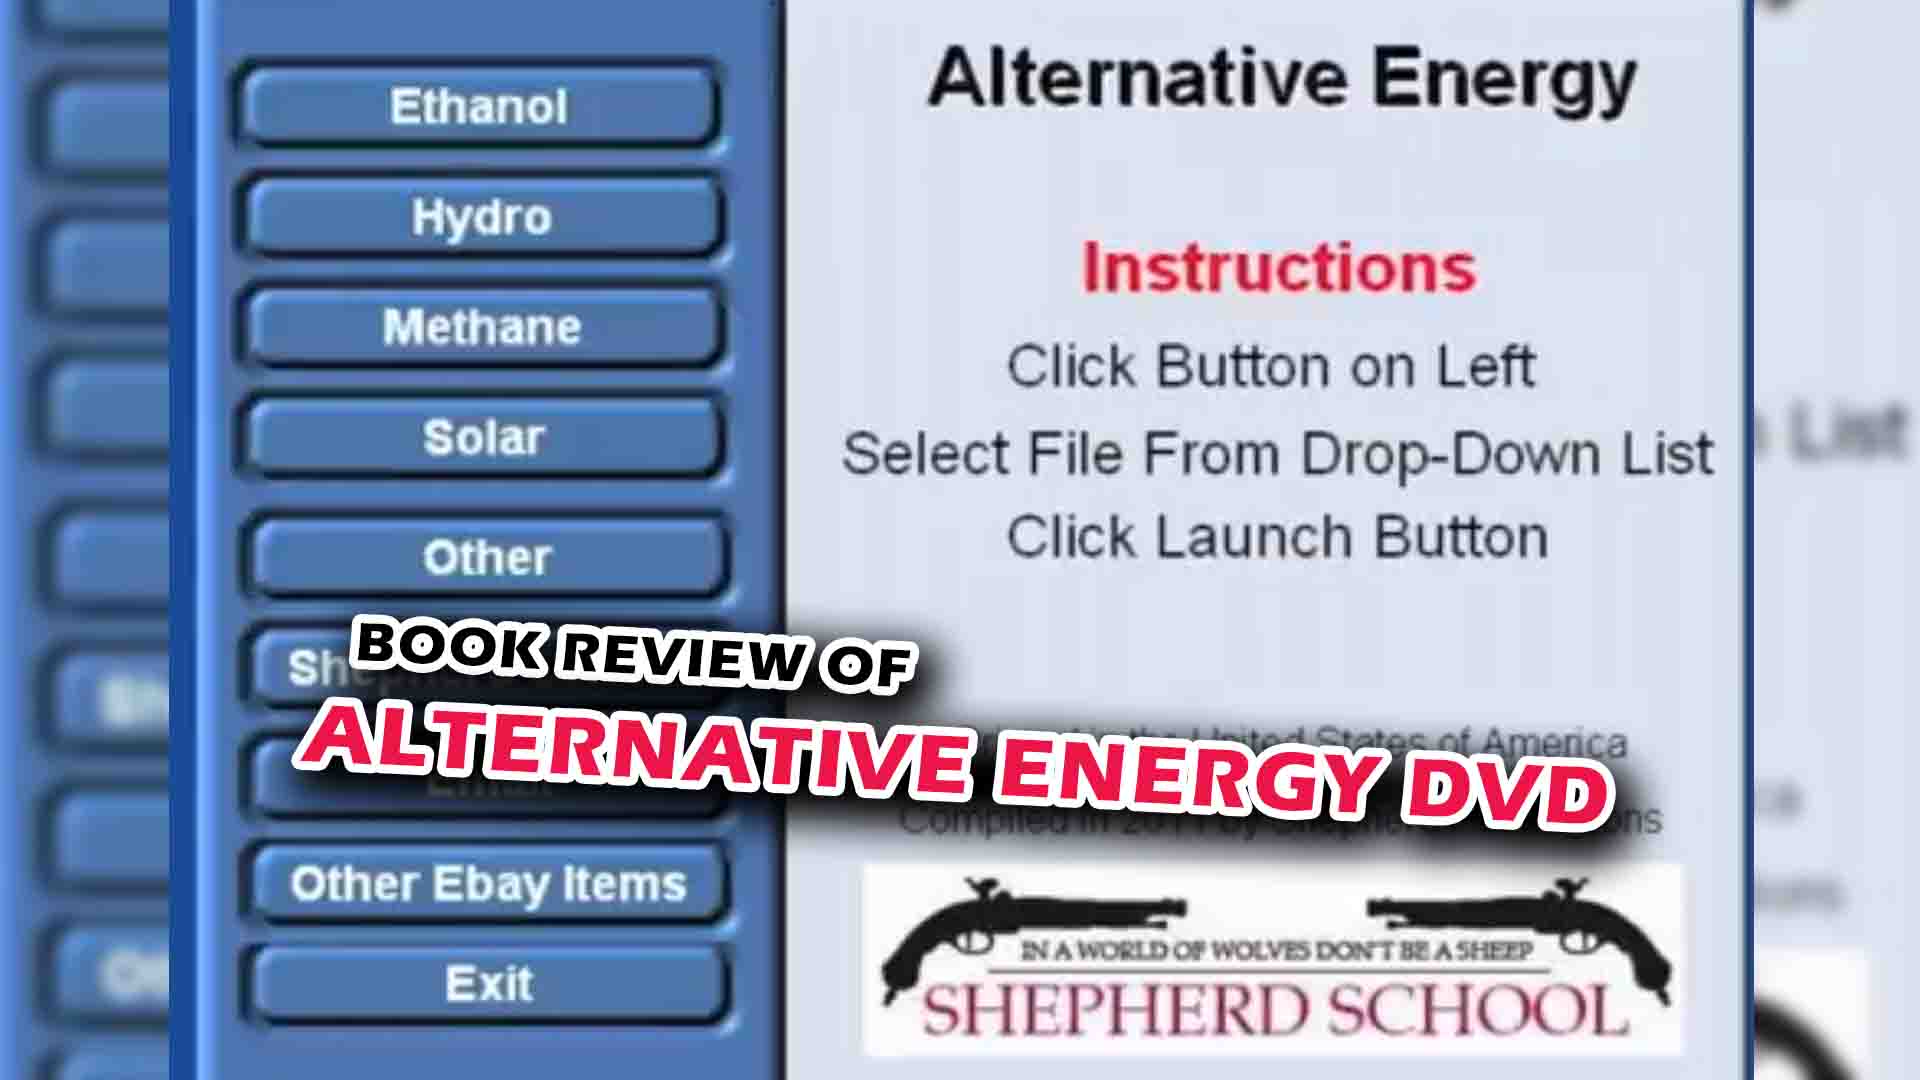 Alternative Energy DVD Book Review